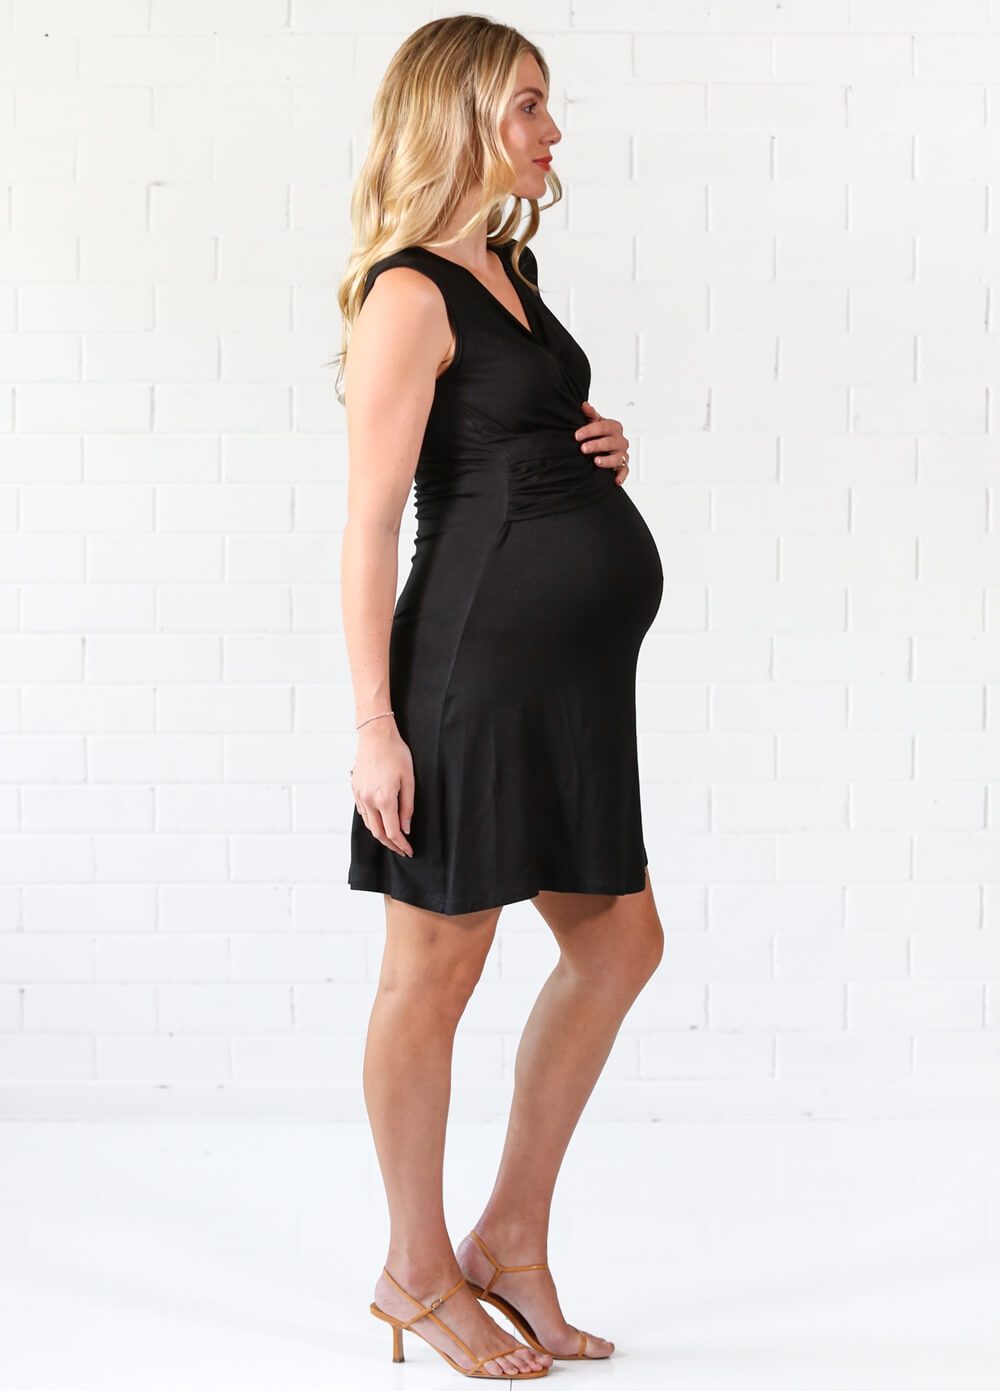 Lait & Co - Moreau Maternity Nursing Dress in Black | Queen Bee